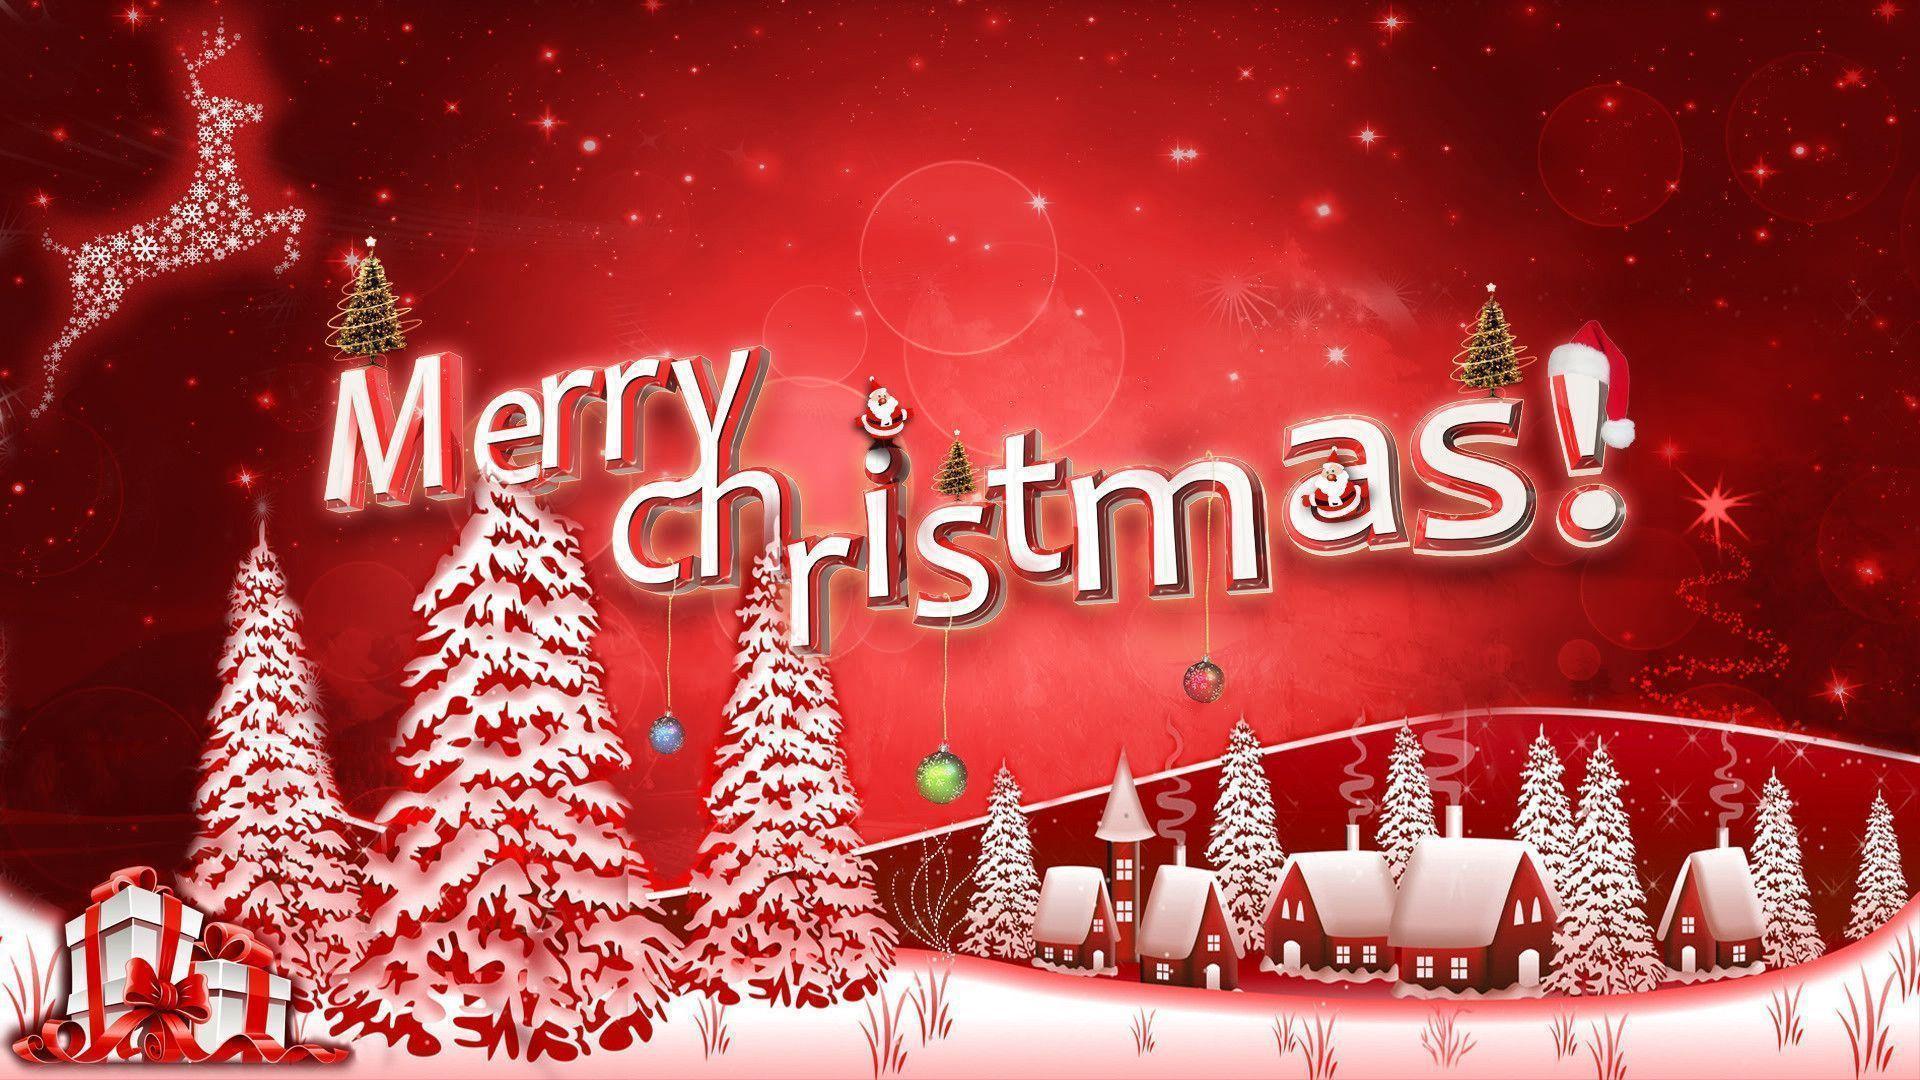 Merry Christmas Beautiful Image Best HD Wallpa Wallpaper